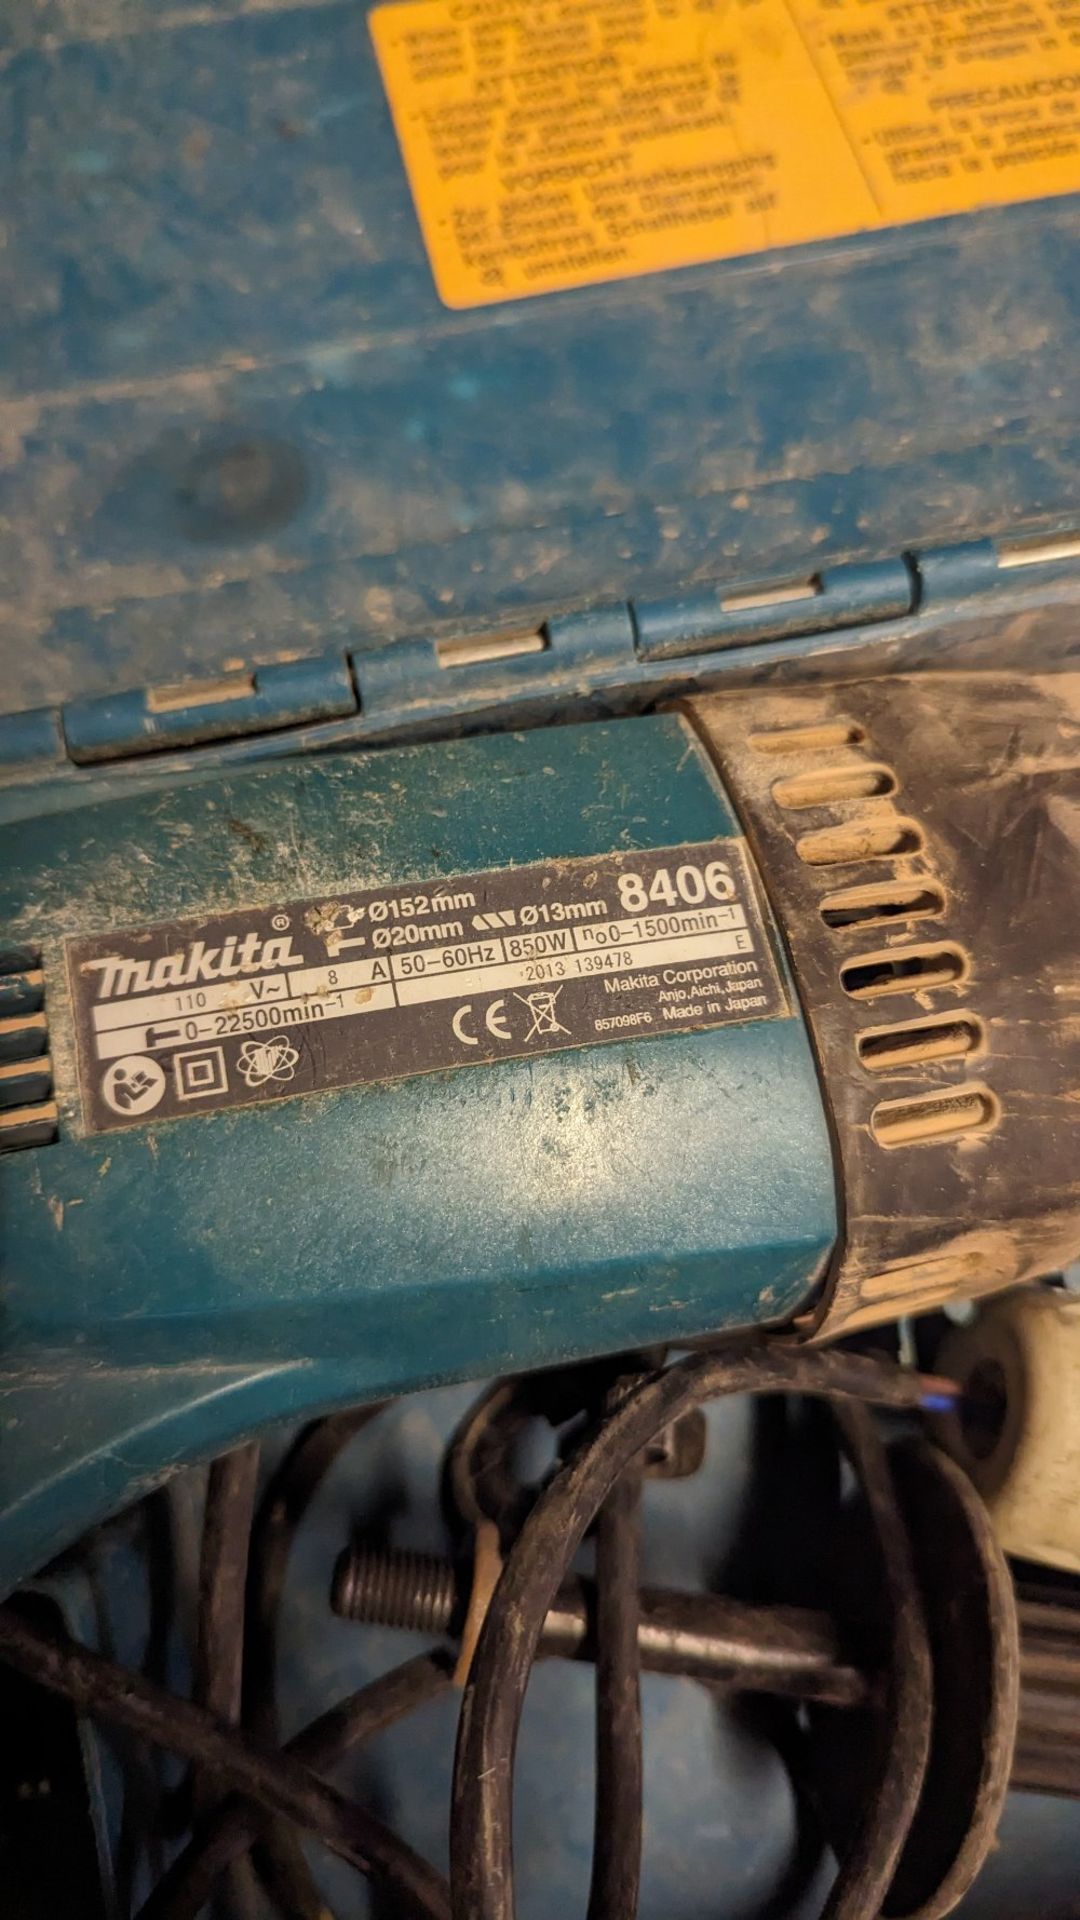 Makita 8406 hammer drill - Image 2 of 2